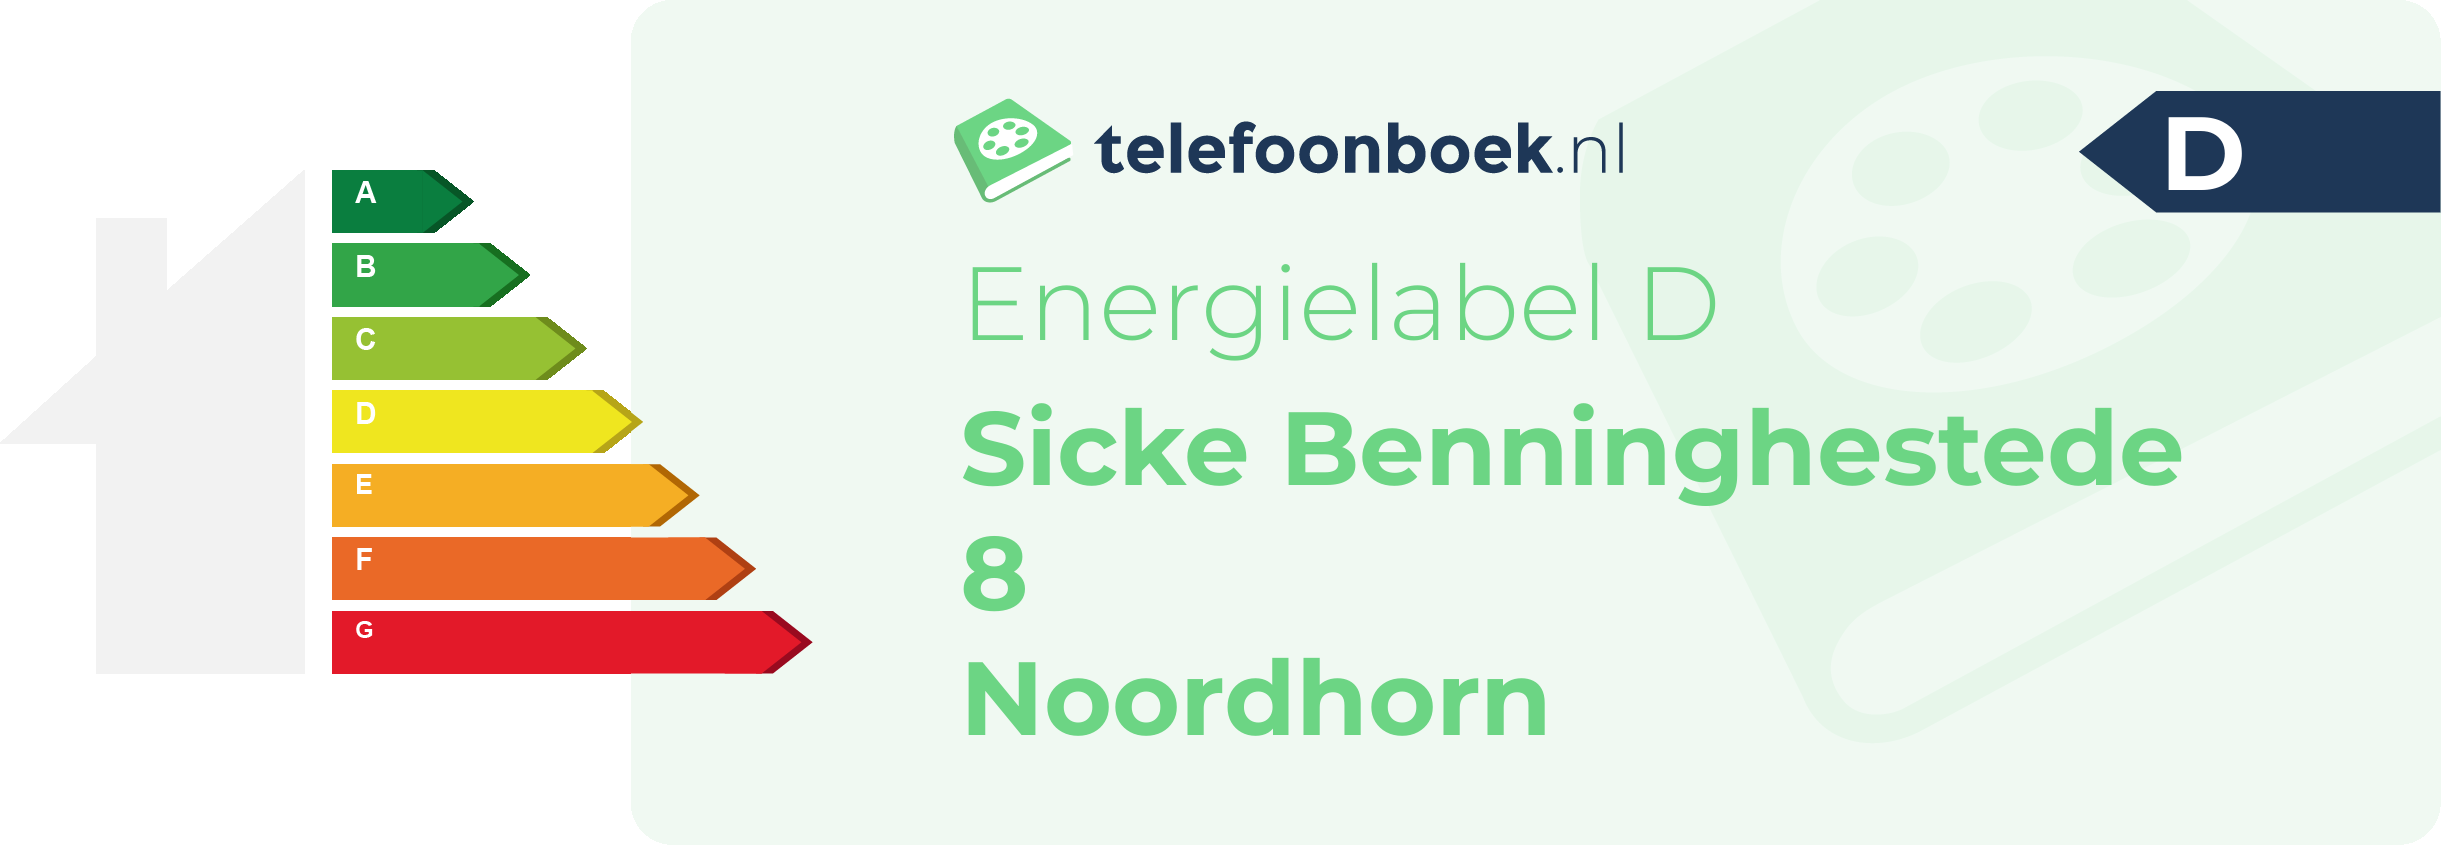 Energielabel Sicke Benninghestede 8 Noordhorn